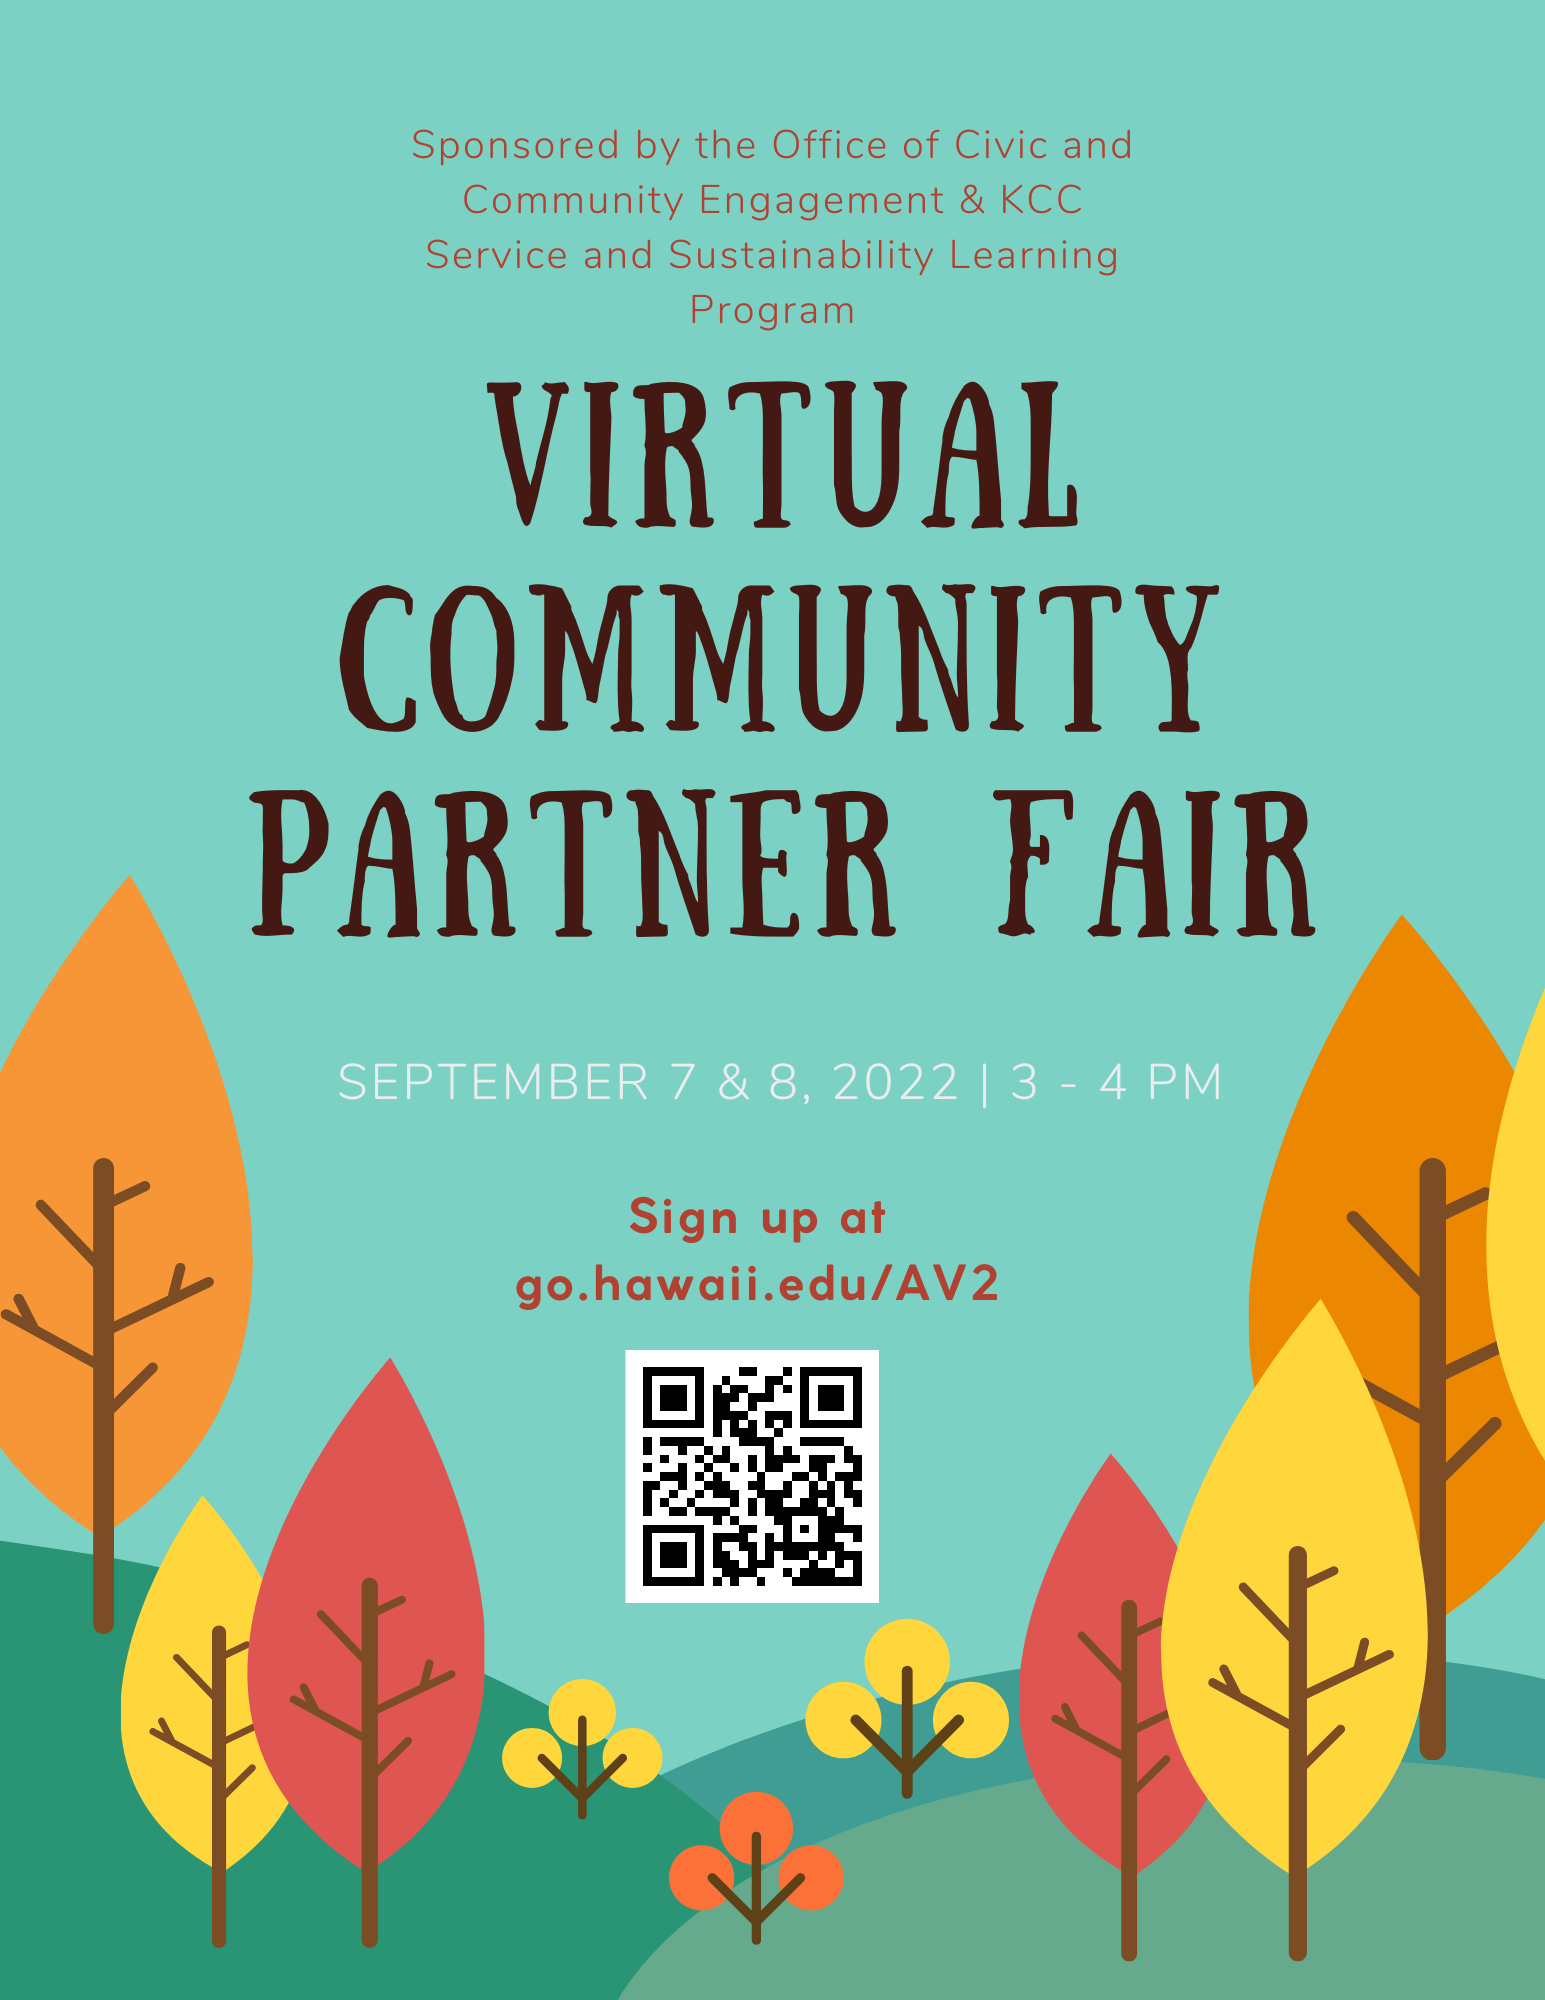 Community partner fair